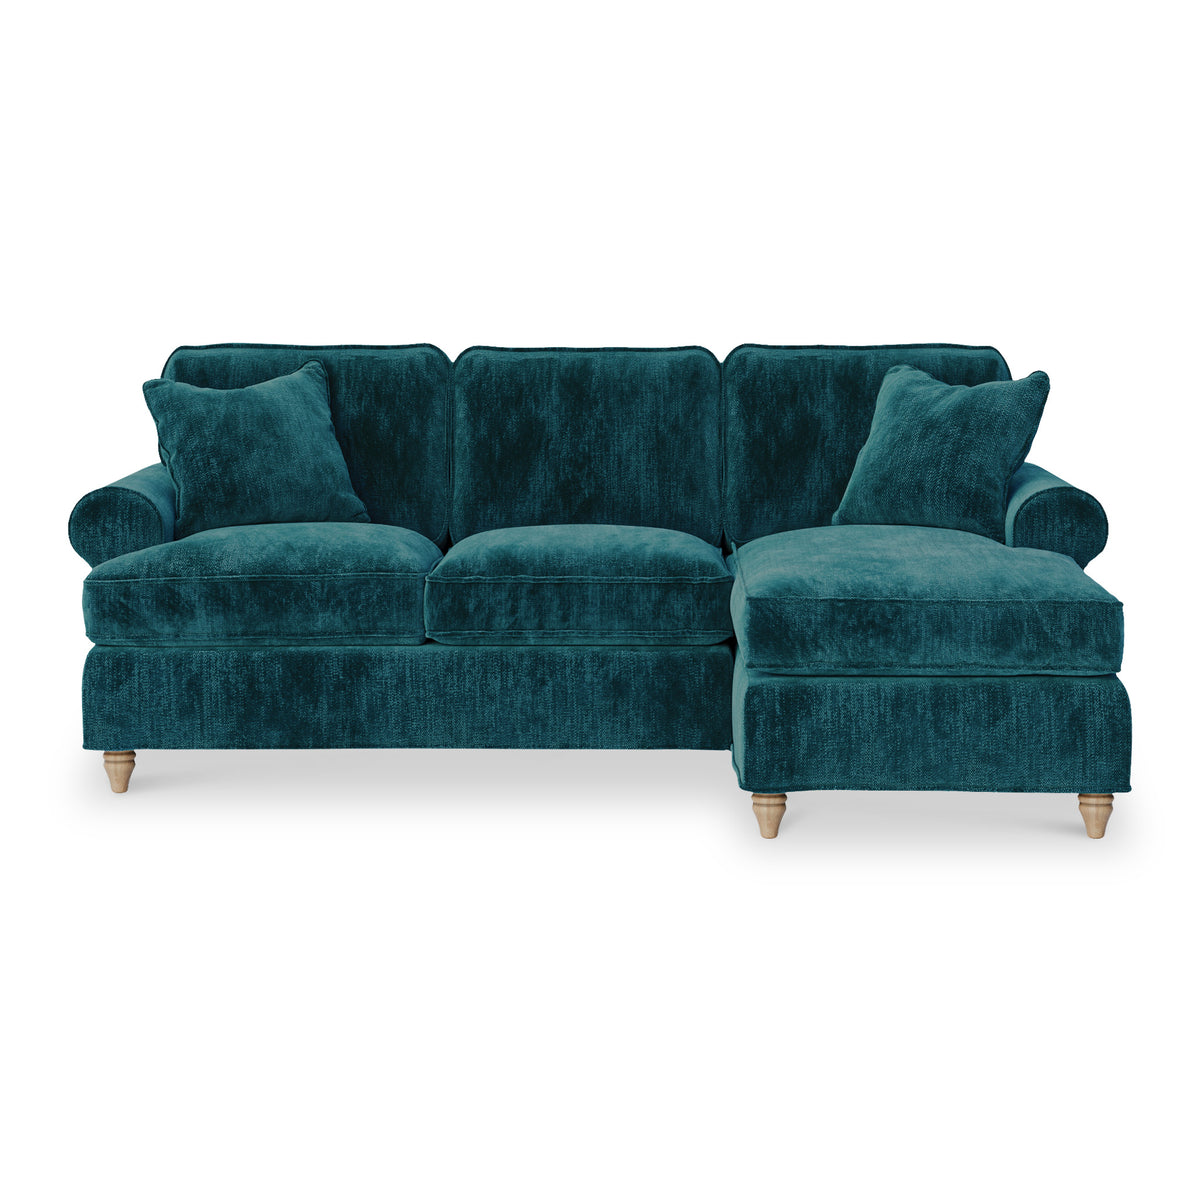 Alfie Chaise Sofa in Emerald by Roseland Furniture